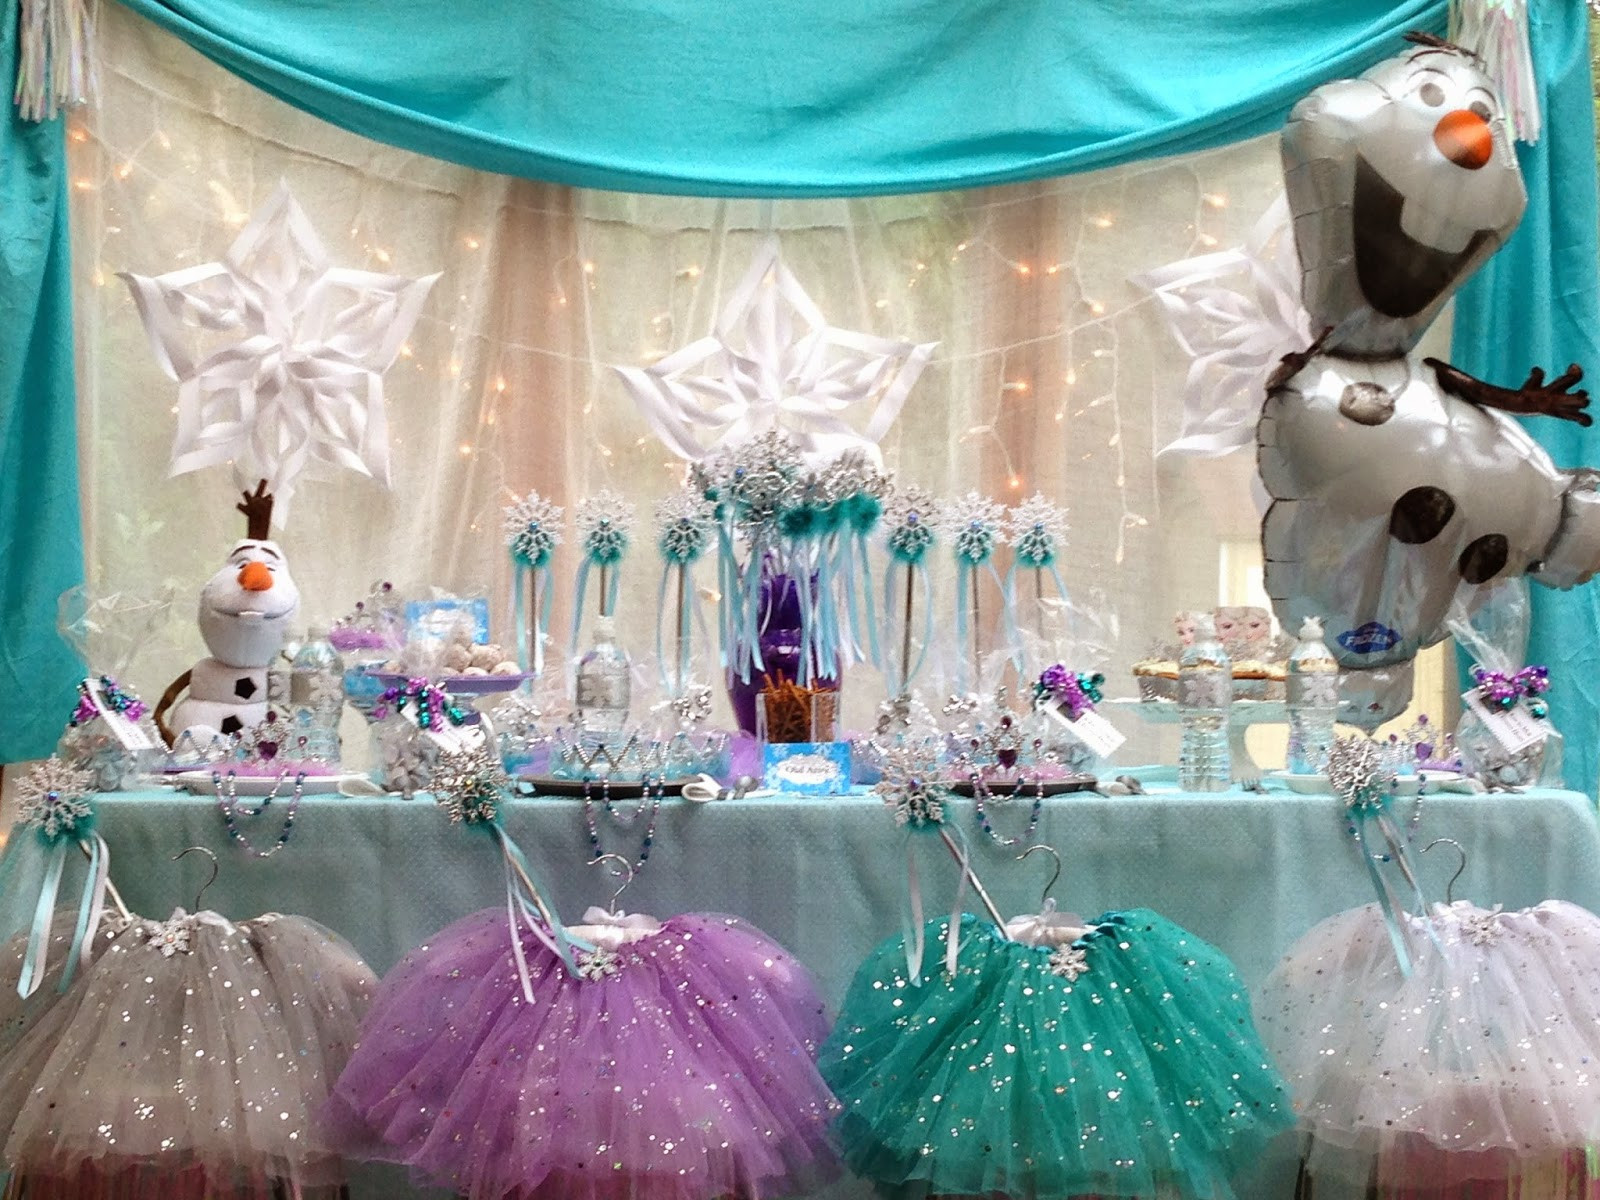 Frozen Birthday Decoration Ideas
 The Princess Birthday Blog FROZEN DIY Snowflake Decorations